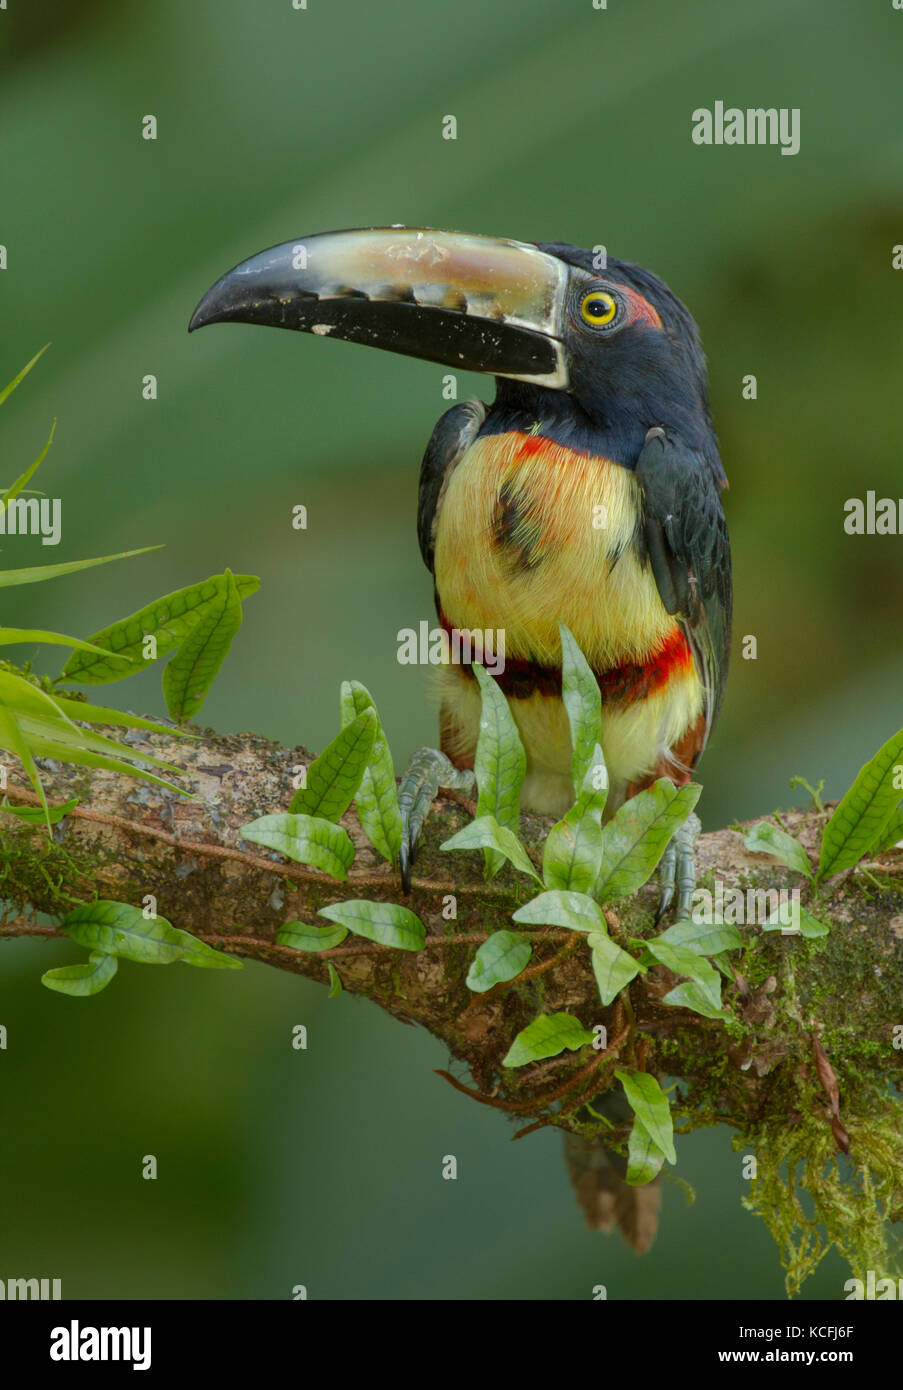 Collared aracari, Pteroglossus torquatus, Perched on a tree branch in Costa Rica, Central America Stock Photo